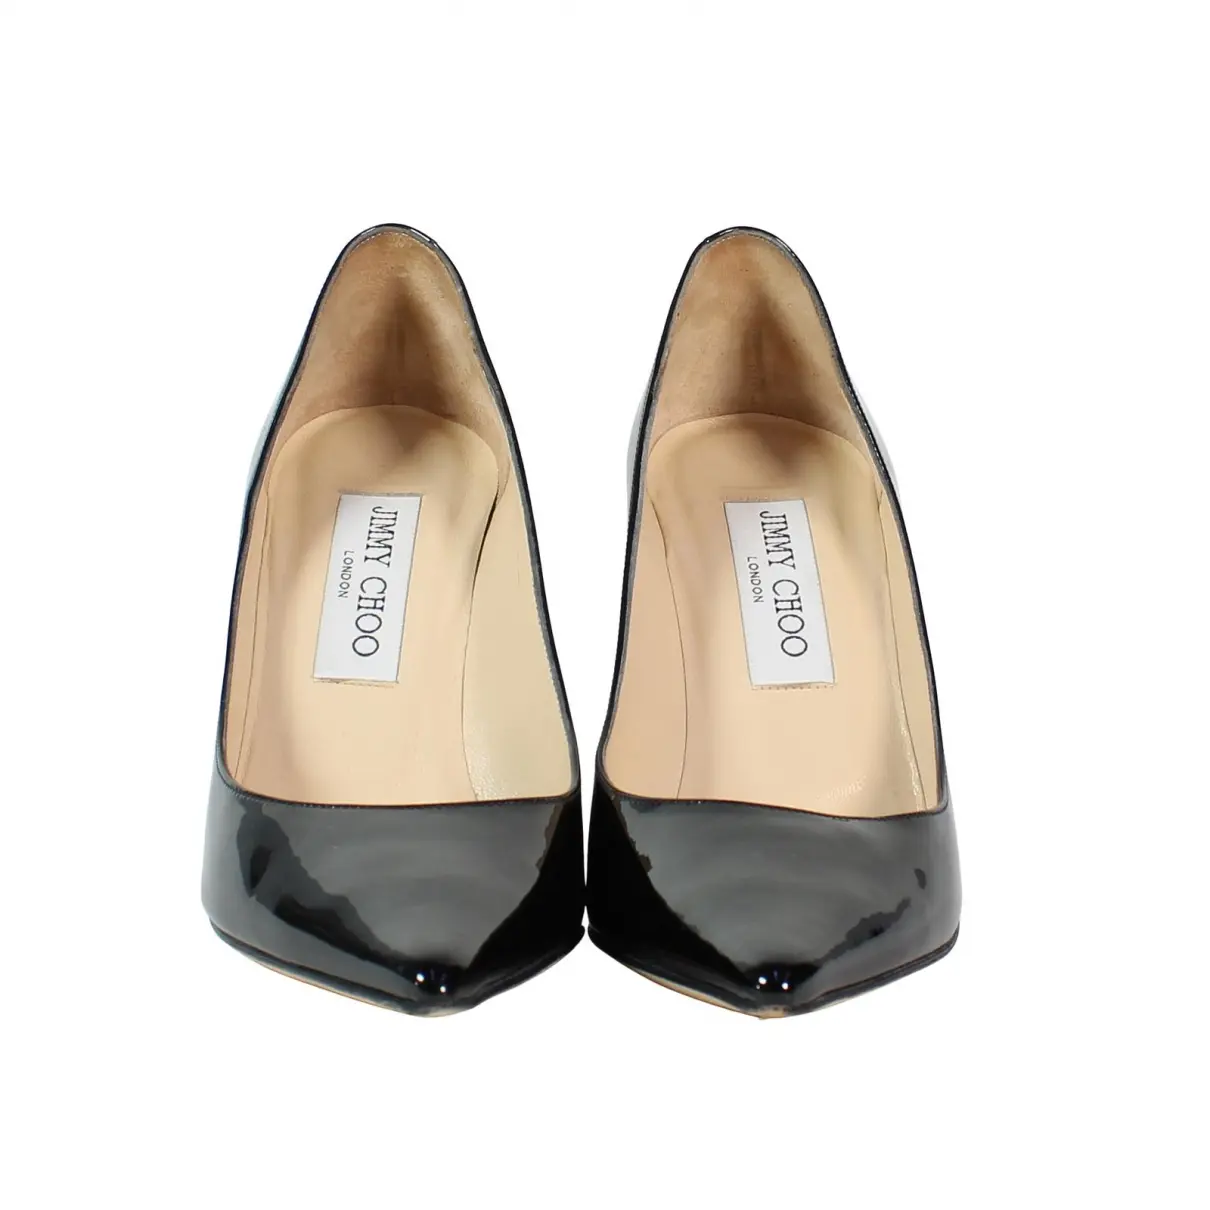 Buy Jimmy Choo Anouk patent leather heels online